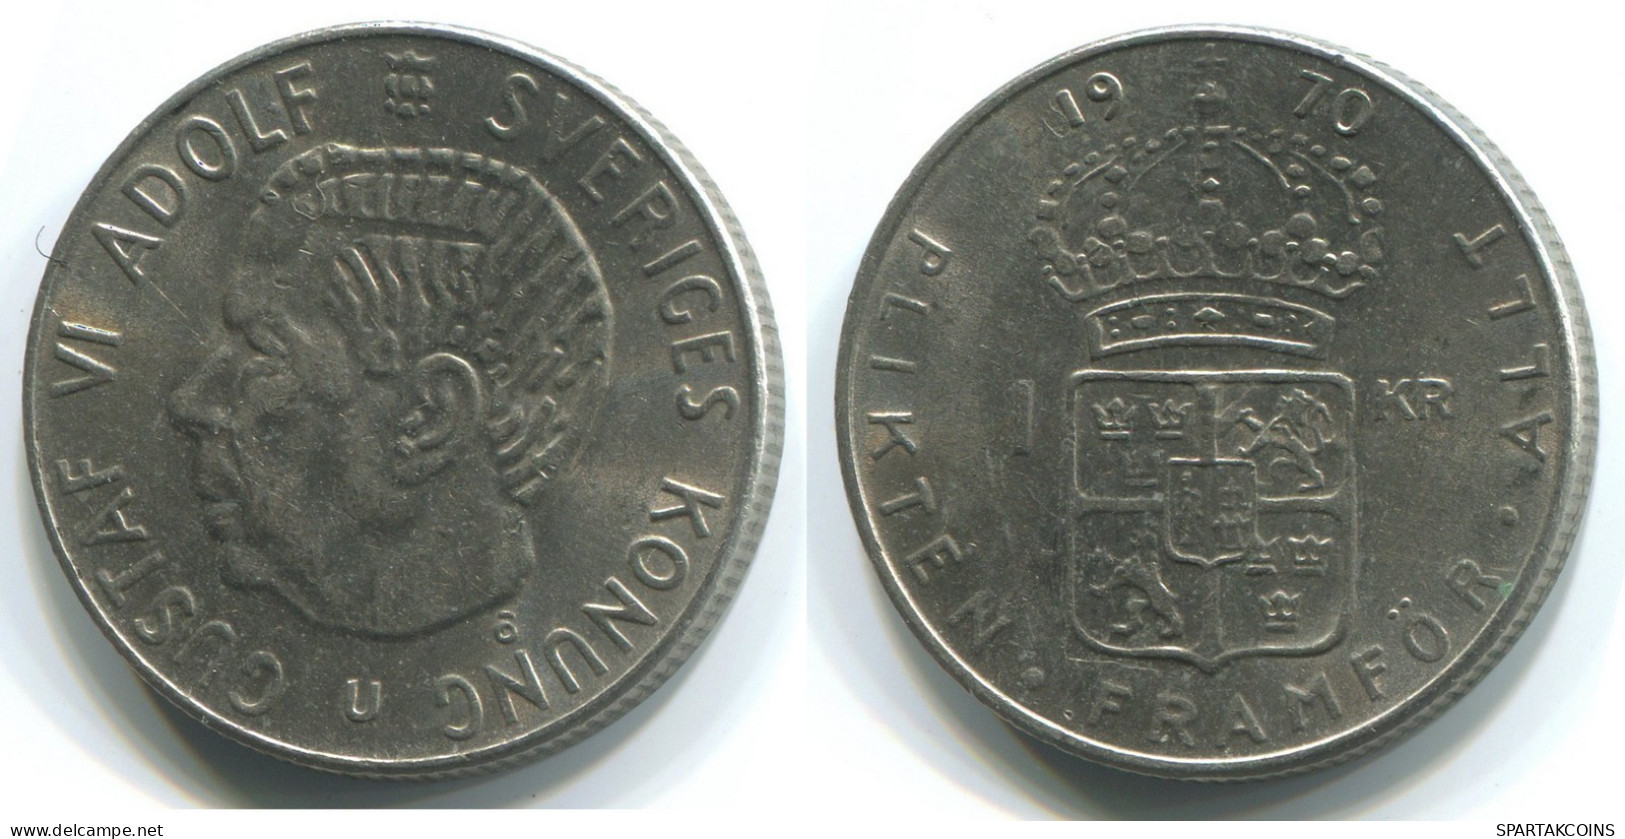 1 KRONA 1970 SUECIA SWEDEN Moneda #WW1094.E.A - Suède